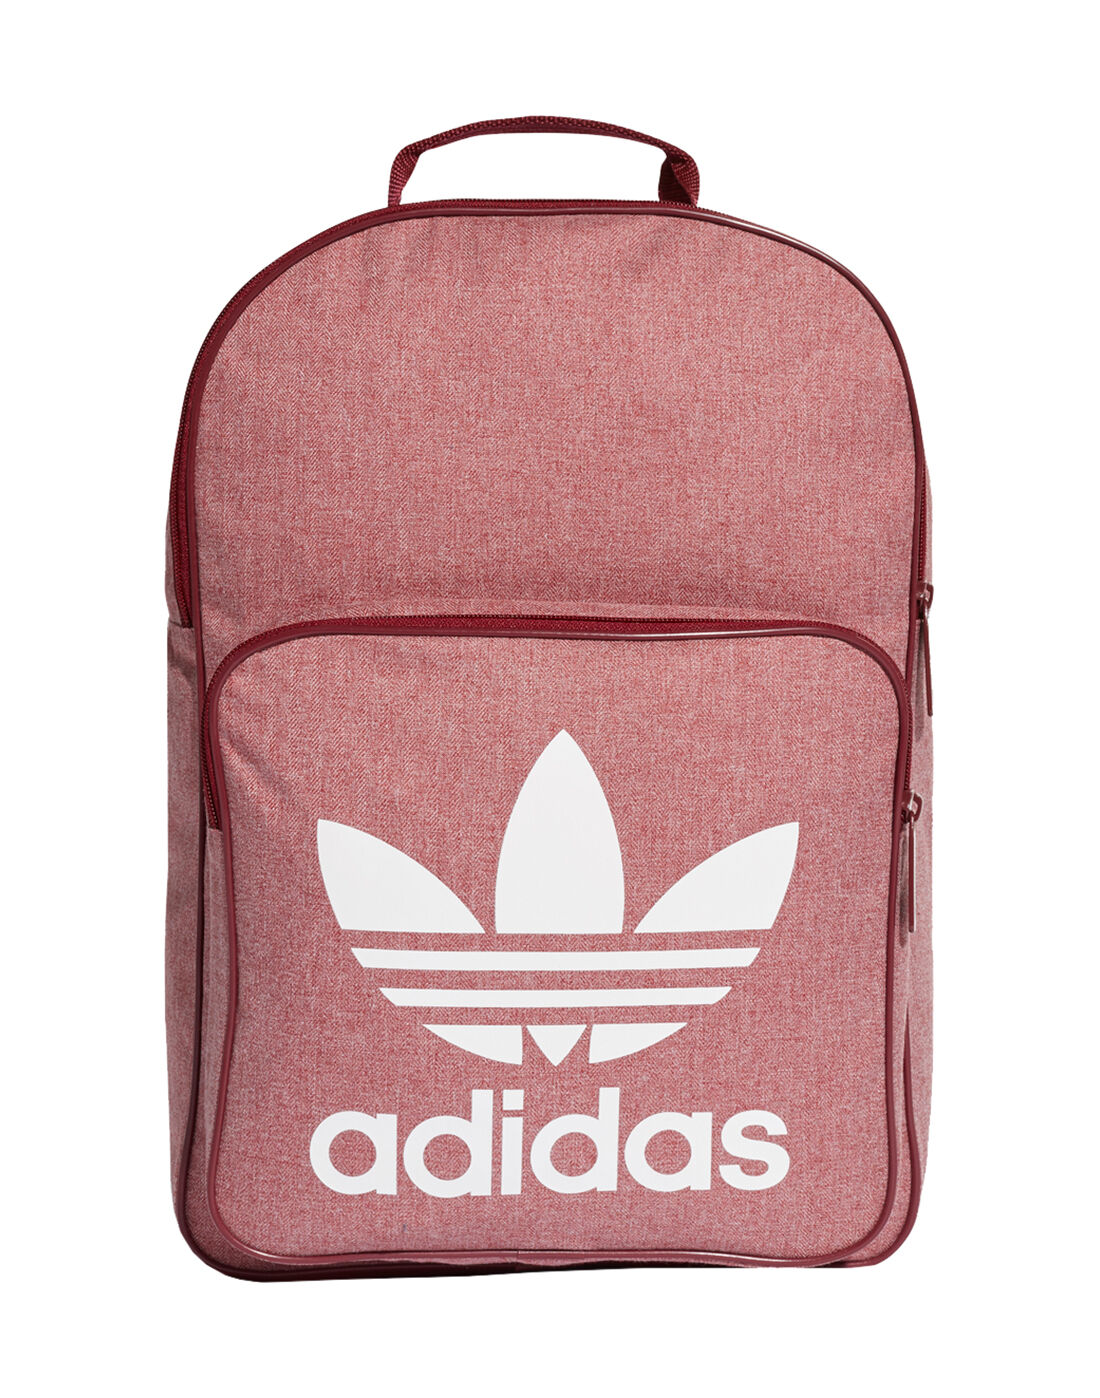 adidas rose backpack